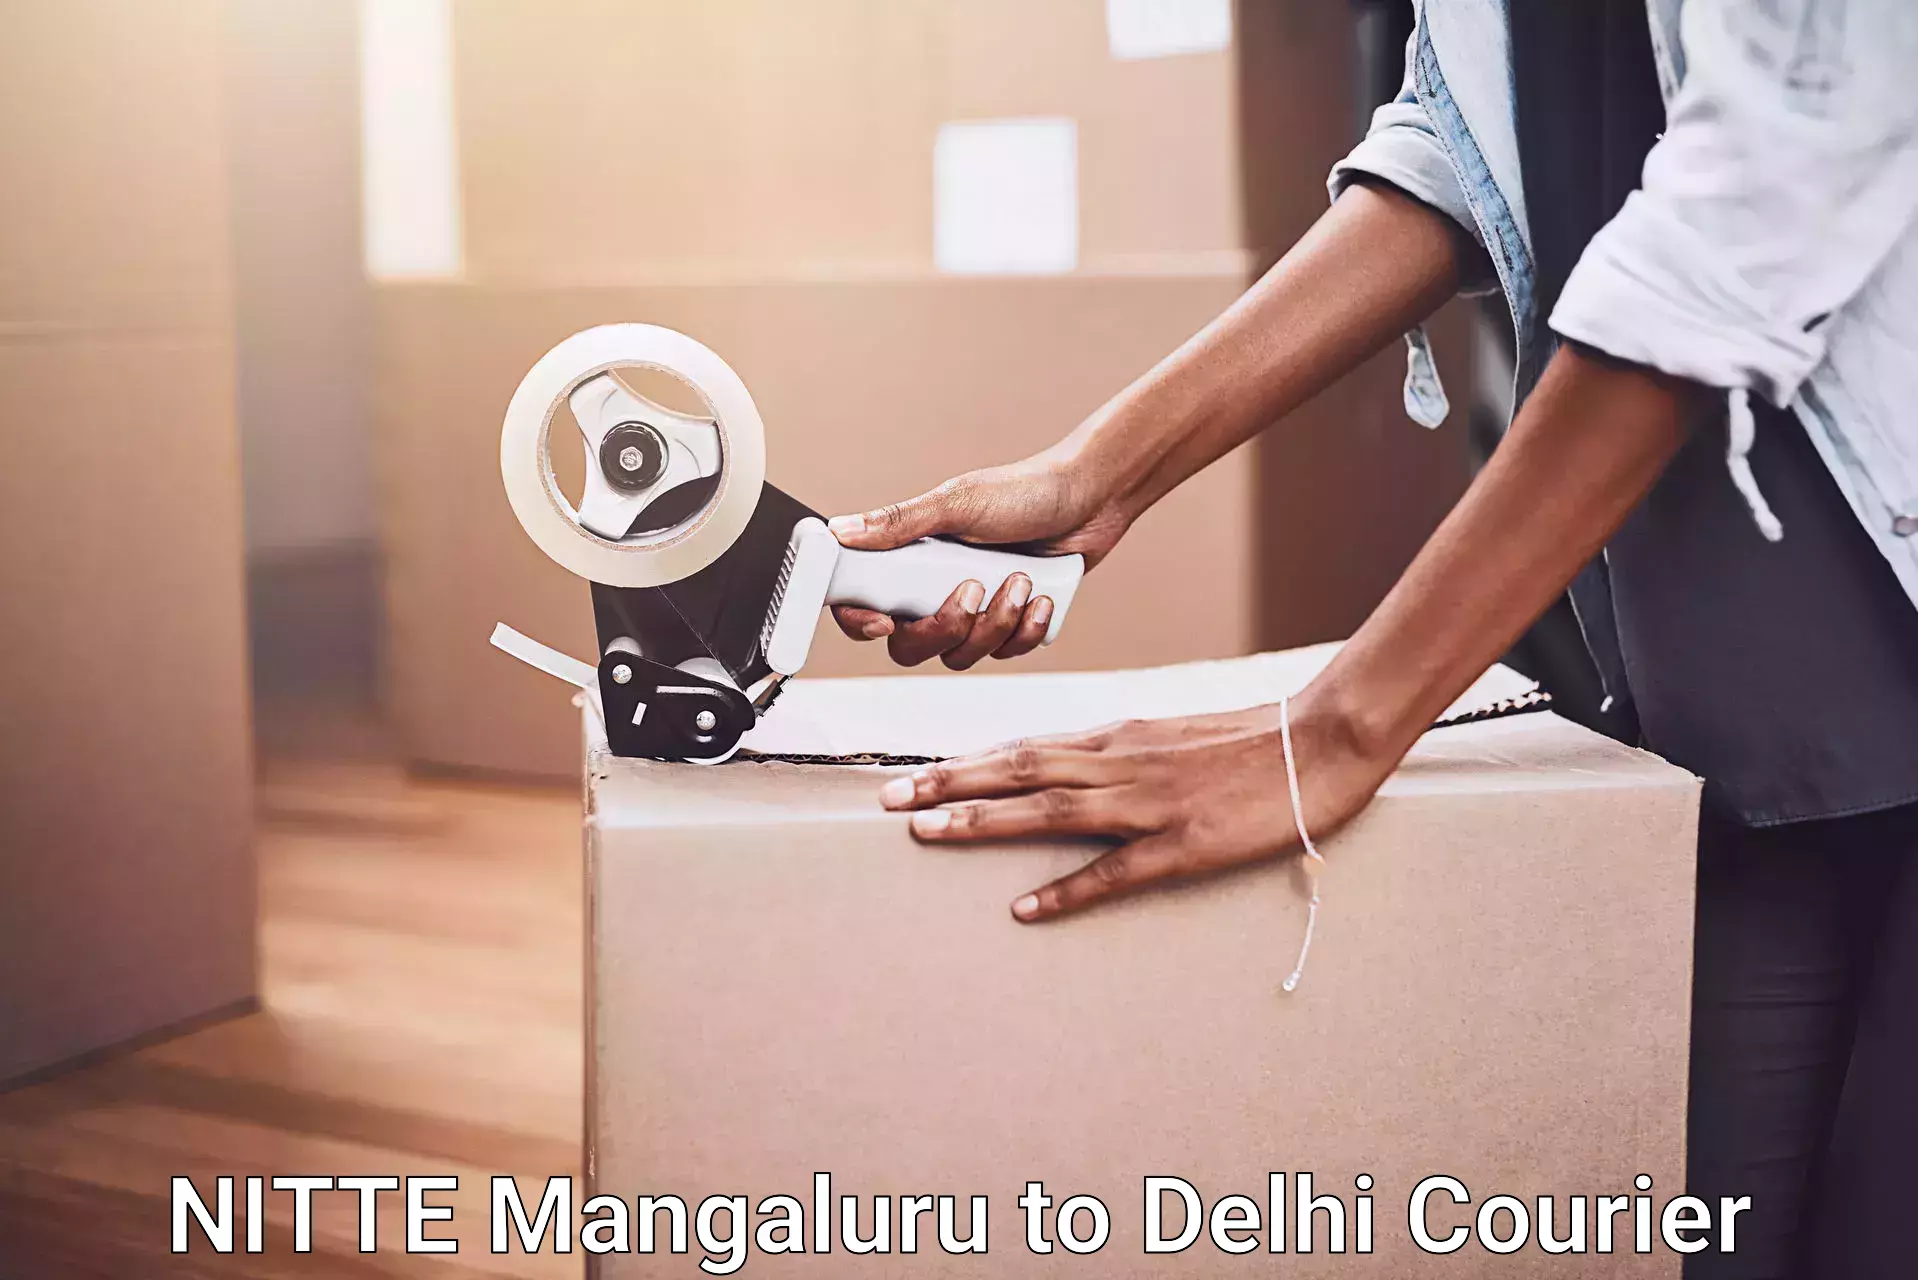 Furniture delivery service NITTE Mangaluru to Delhi